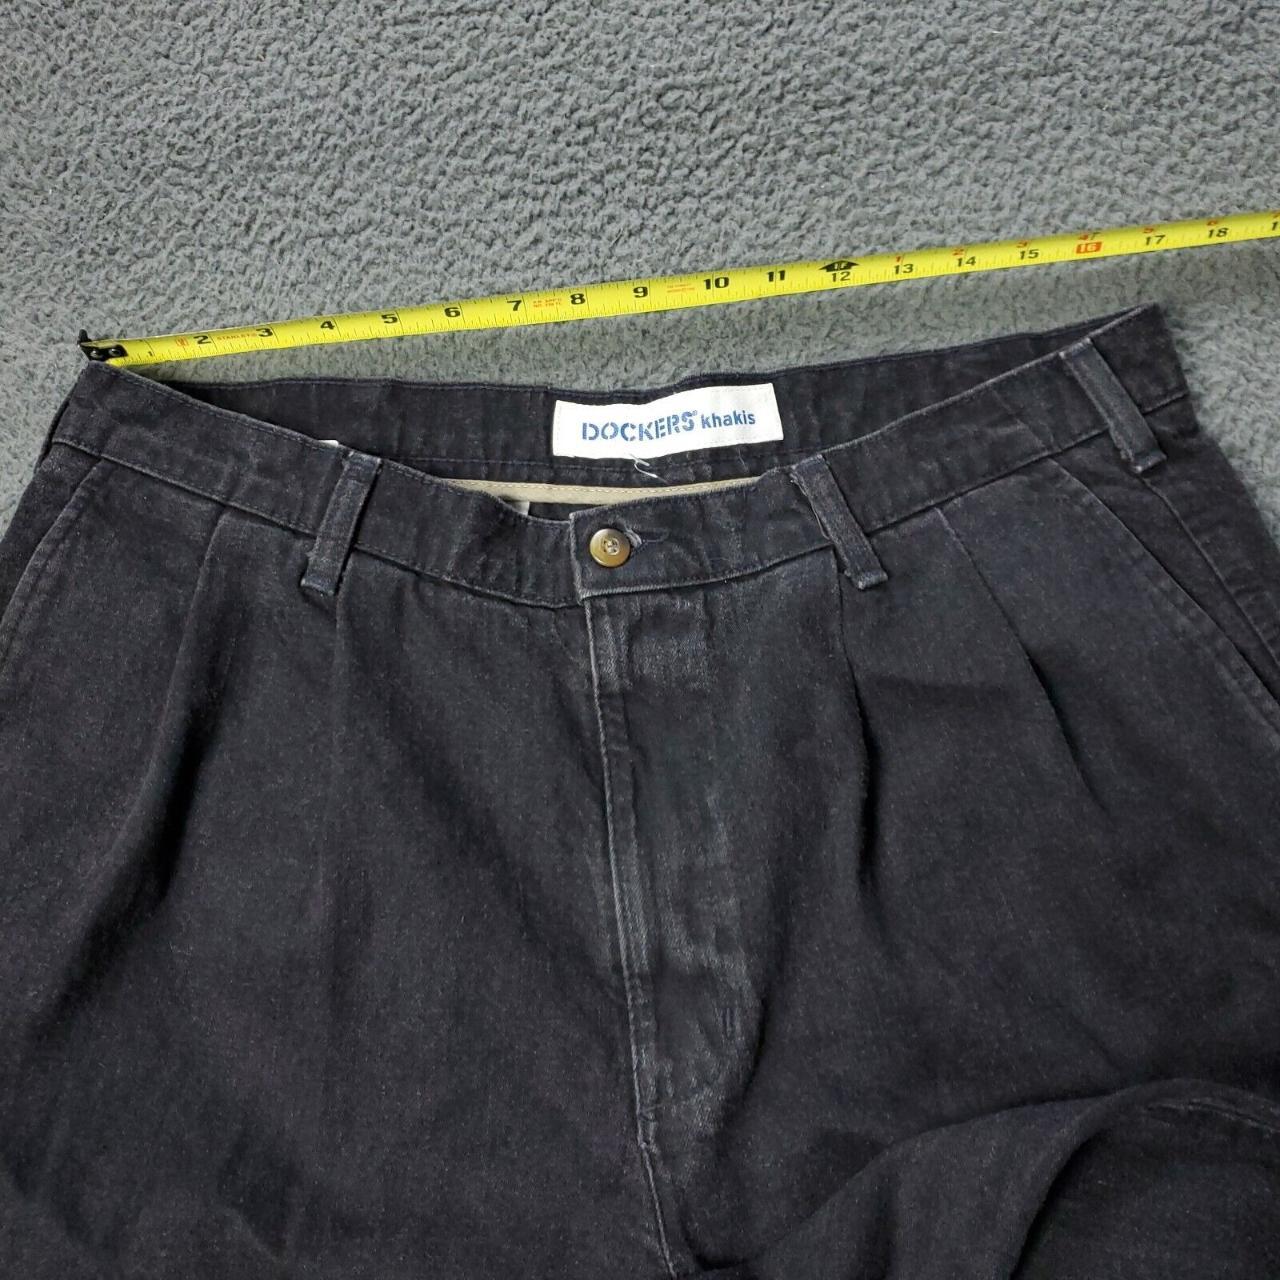 Dockers Men's Black Jeans (4)